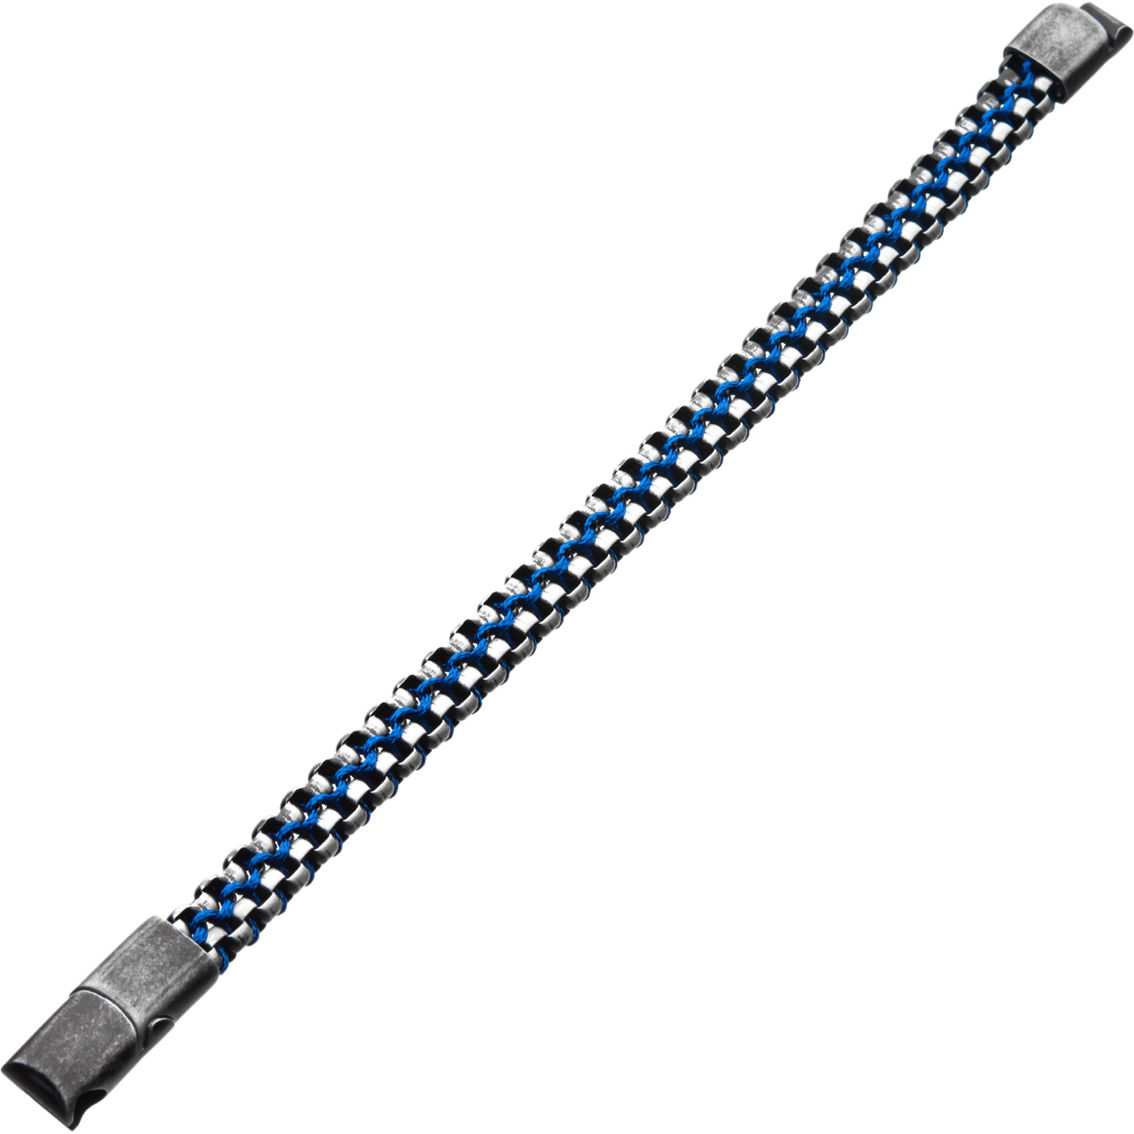 Inox Allegiance Stainless Steel Bracelets - Image 2 of 3